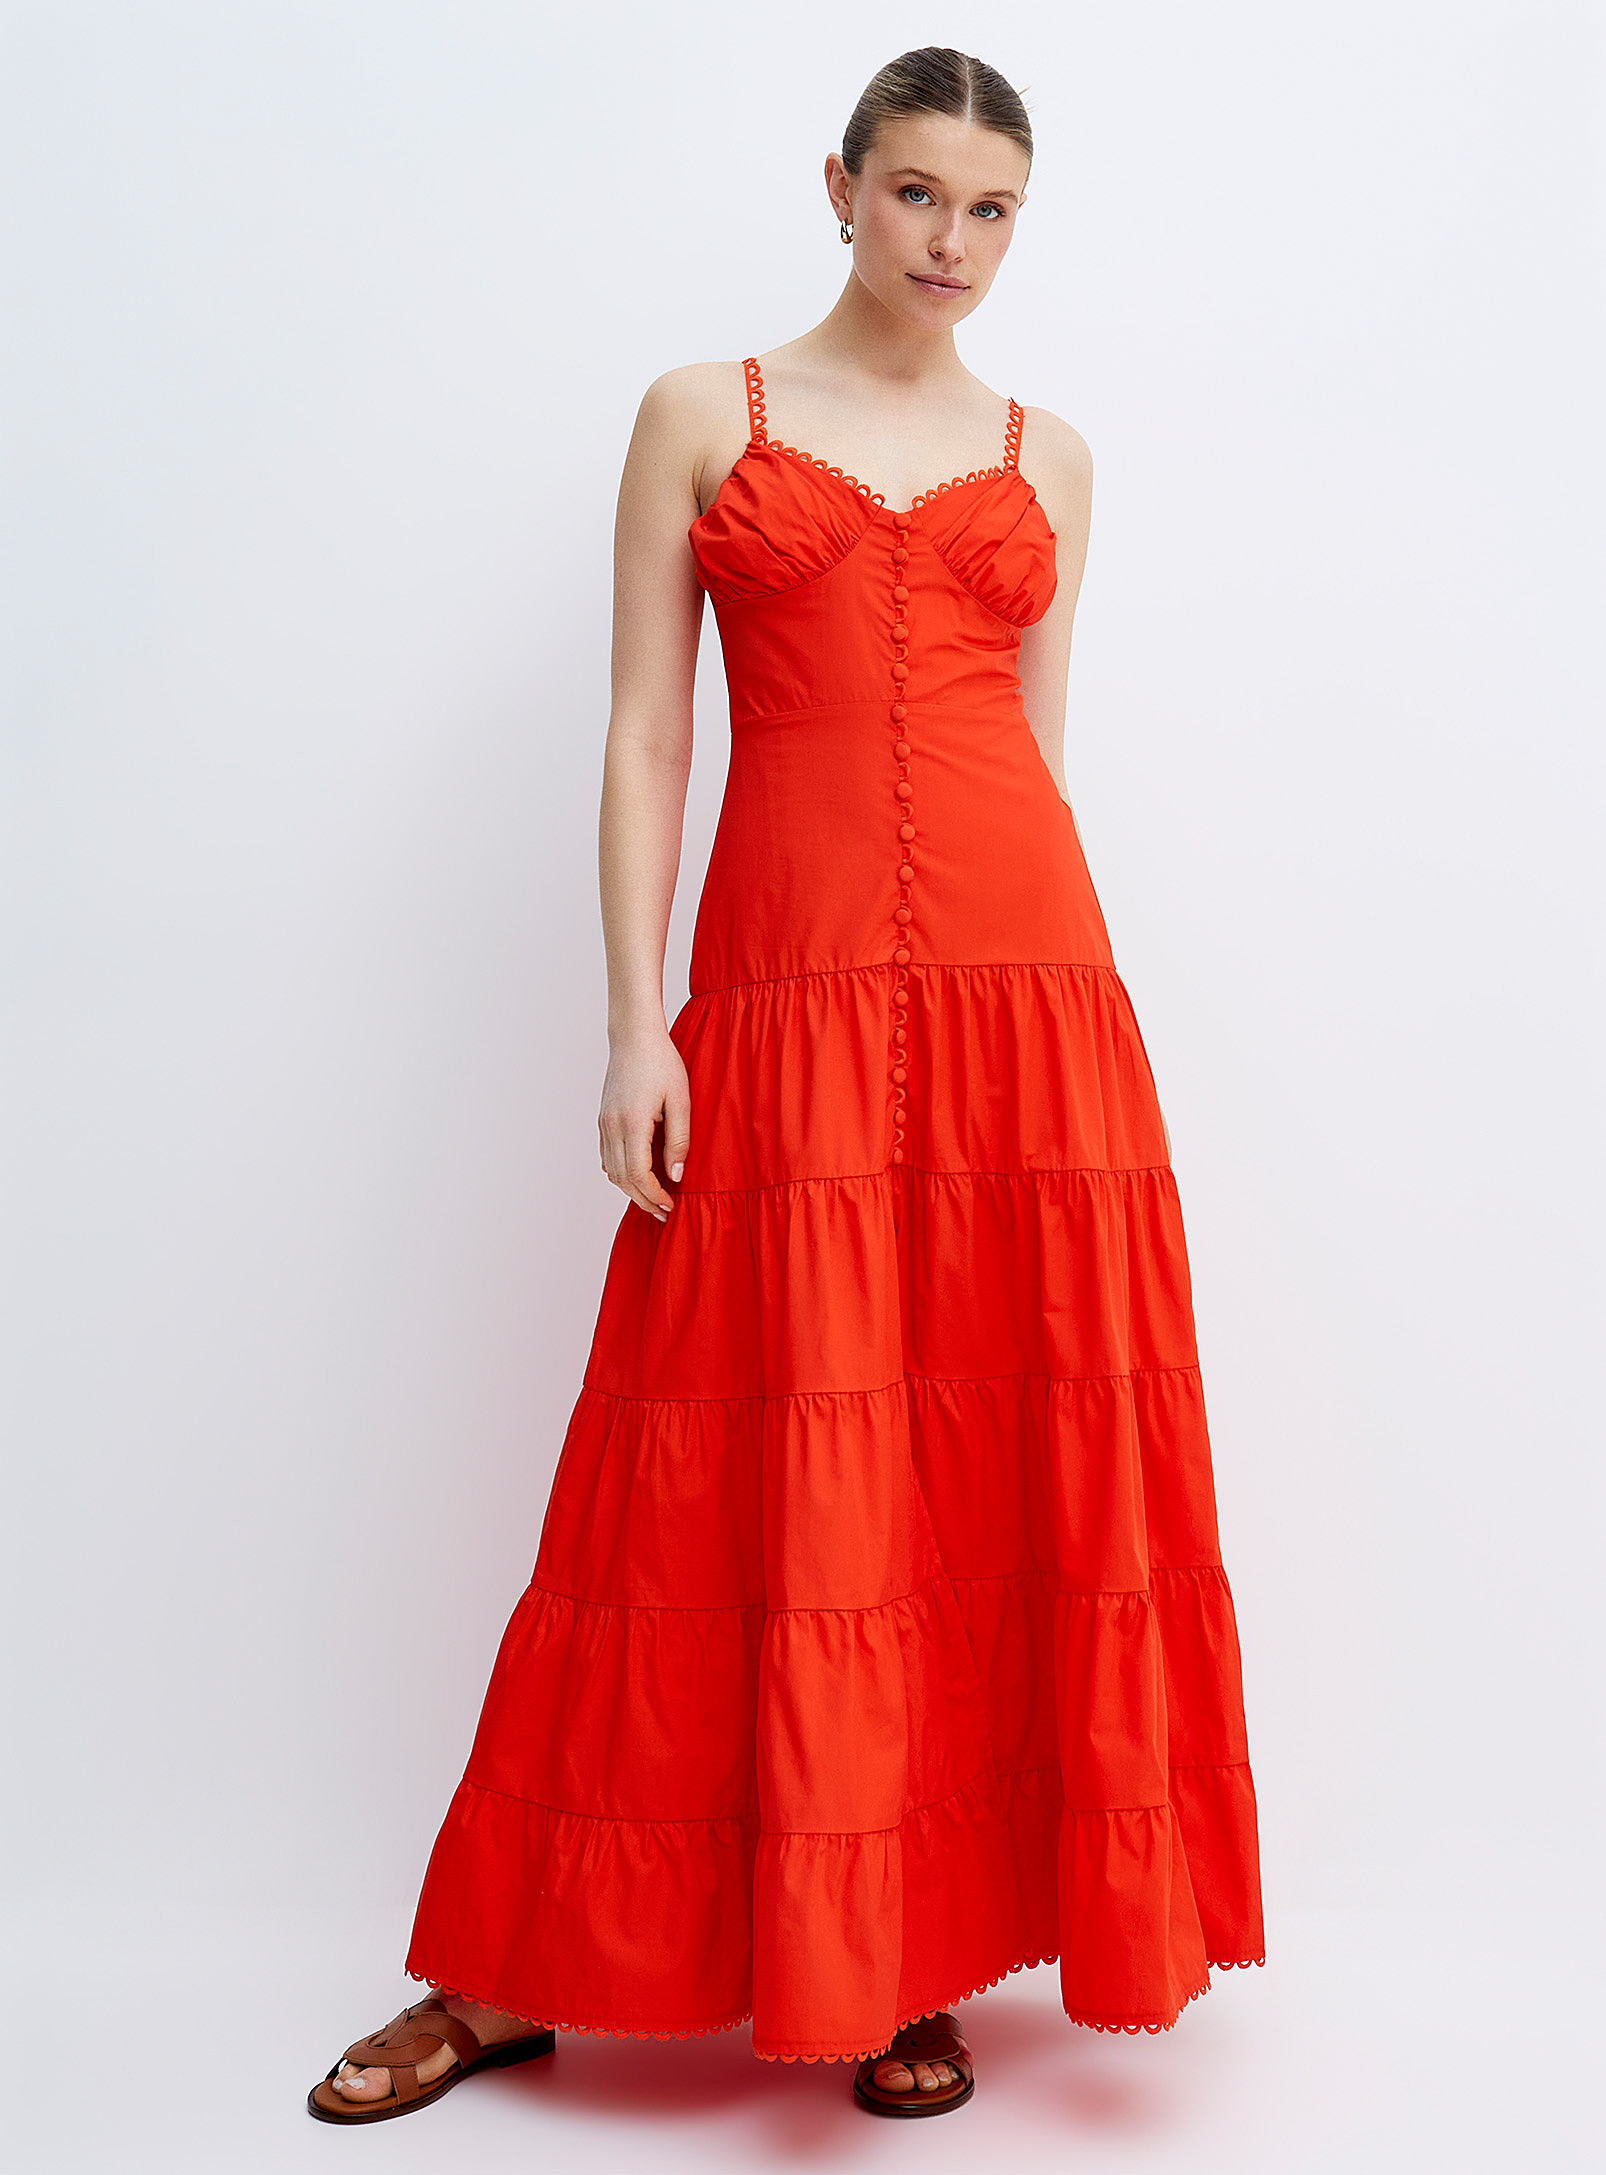 Icône - La longue robe étagée tangerine vibrante